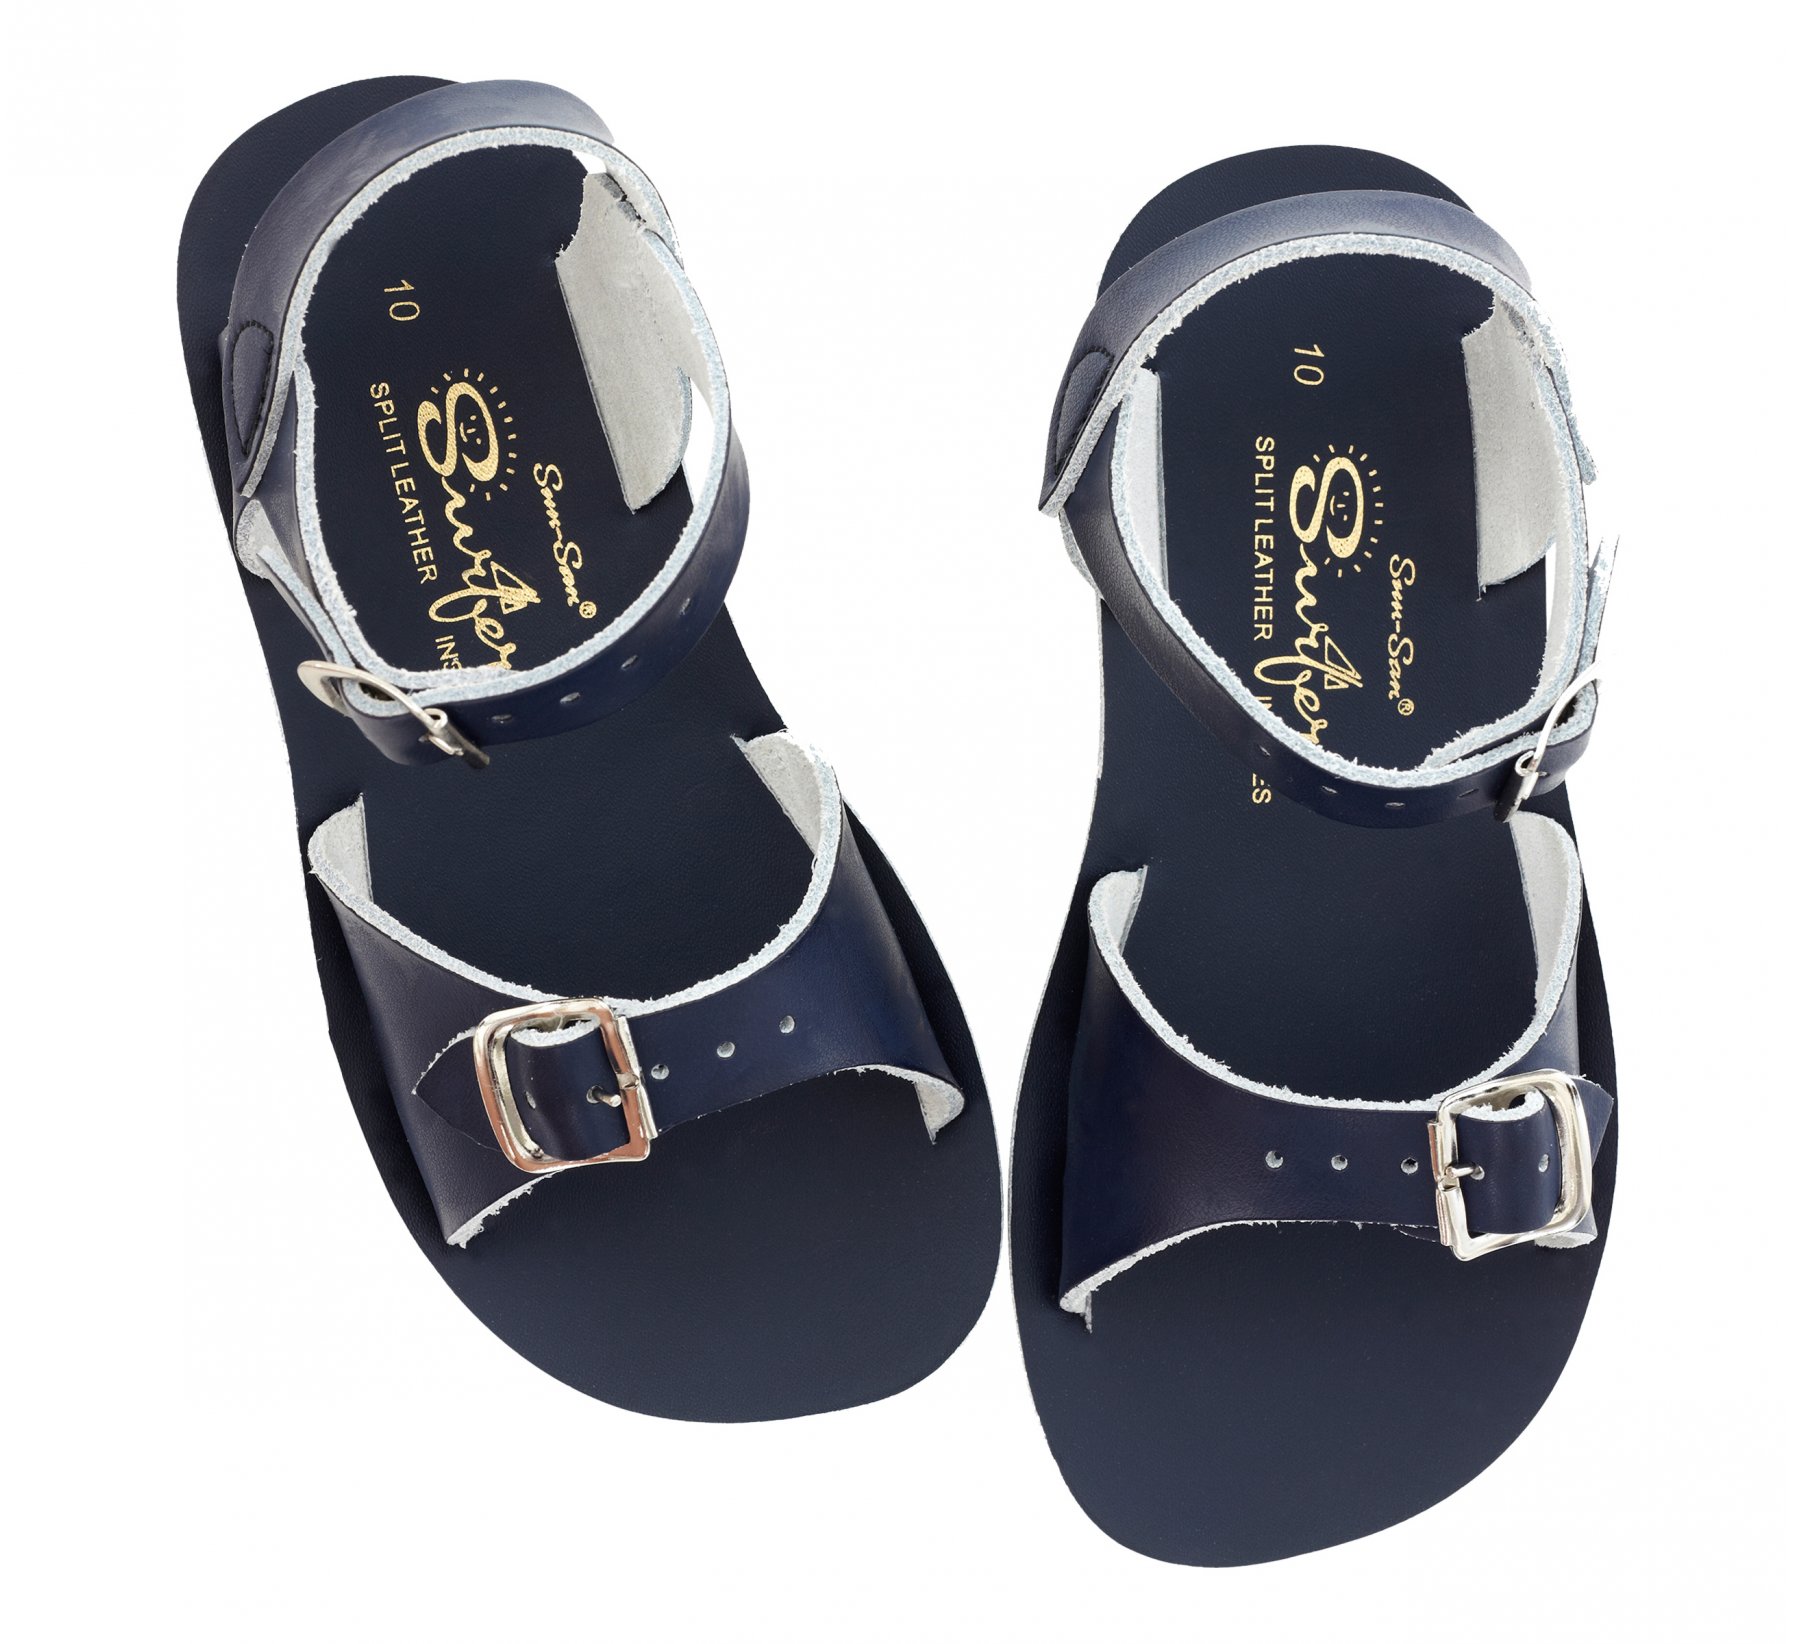 Surfer Navy Kids Sandals - Salt Water Sandals